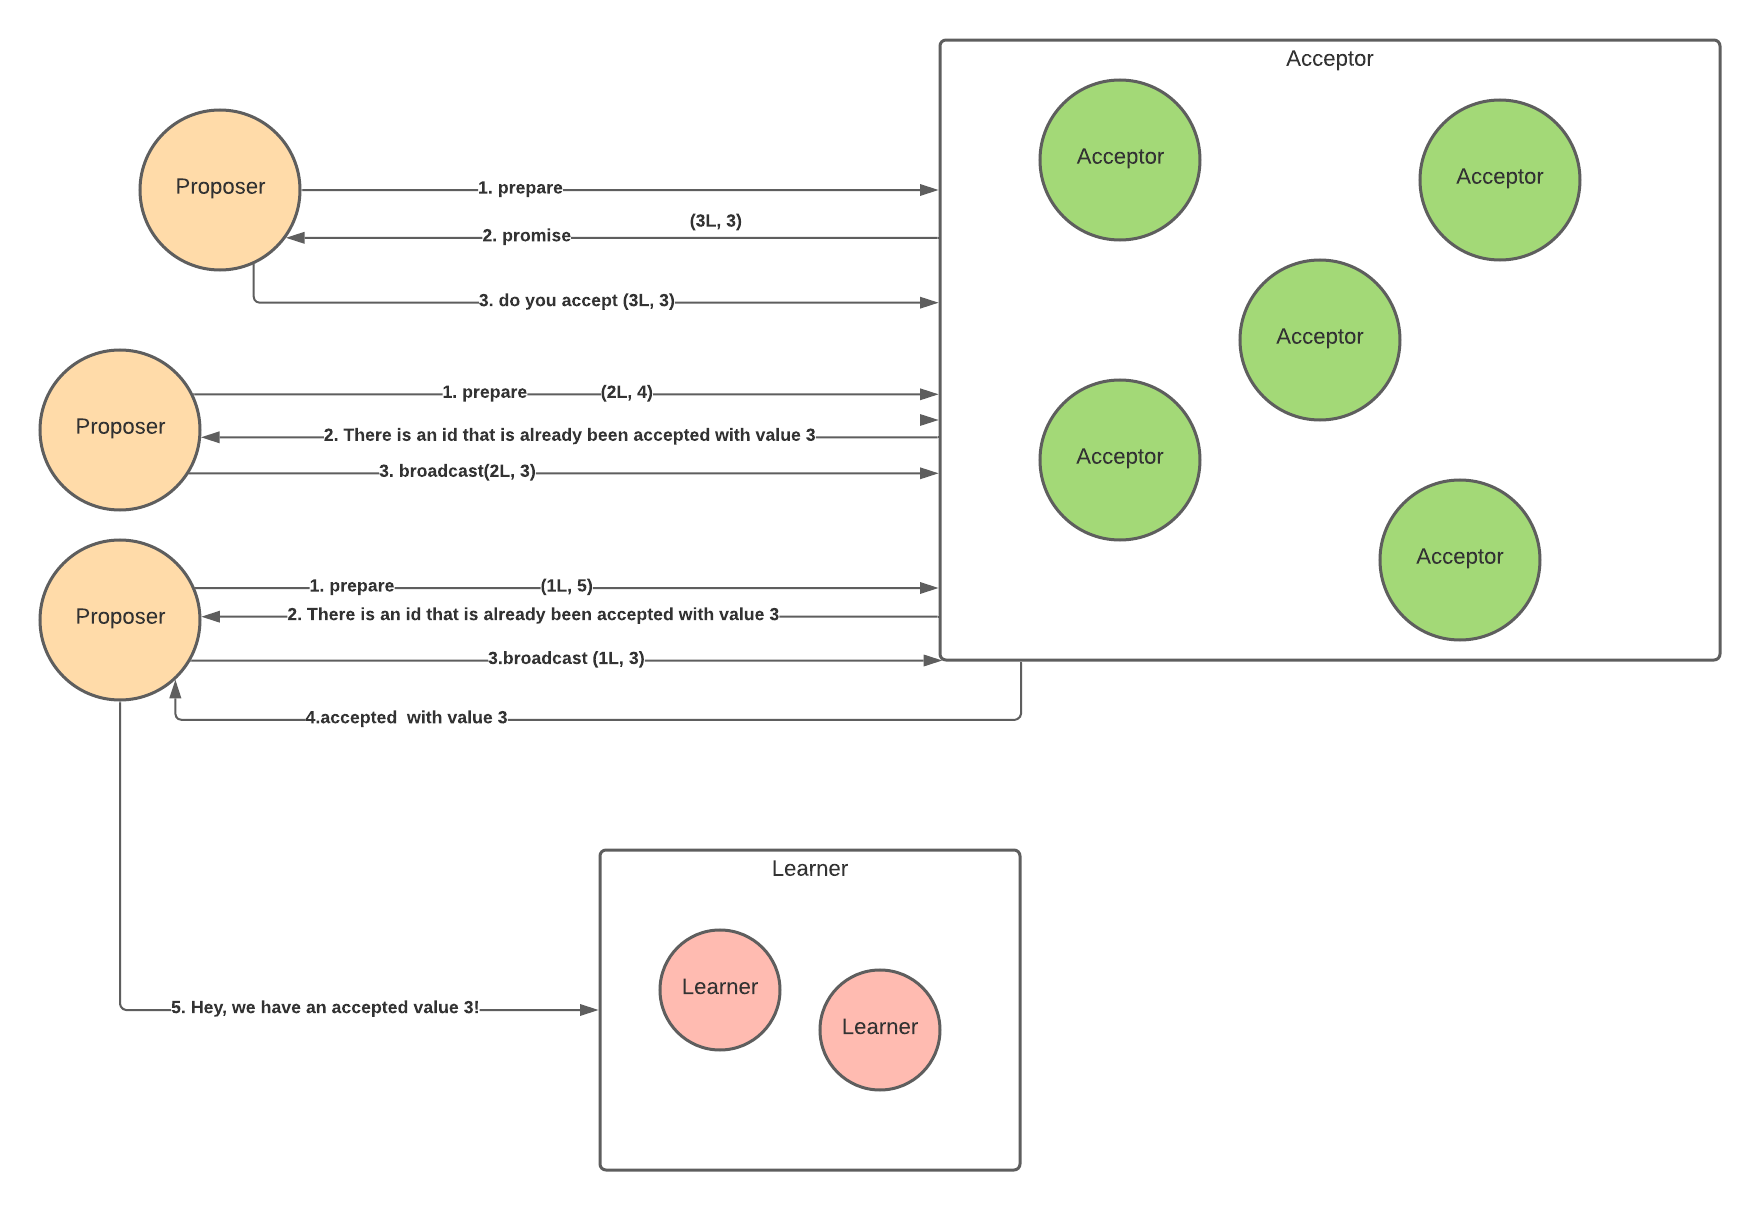 Paxos-Role-Simple-Diagram